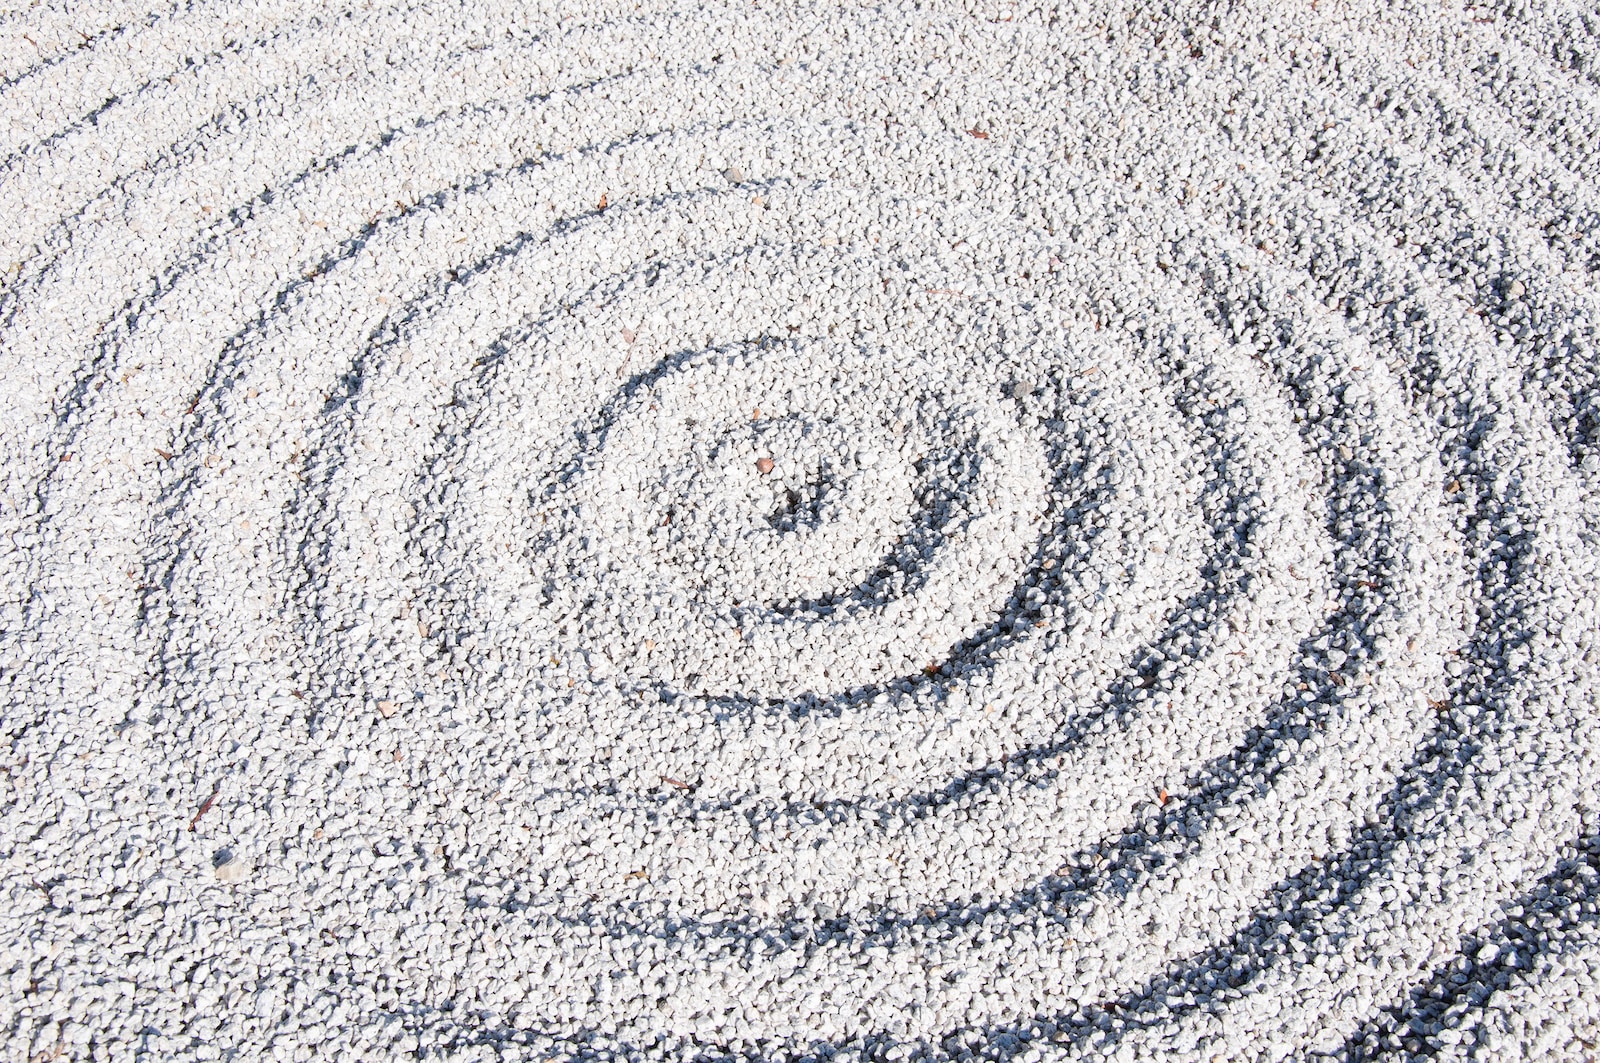 a circular design made of sand on a beach